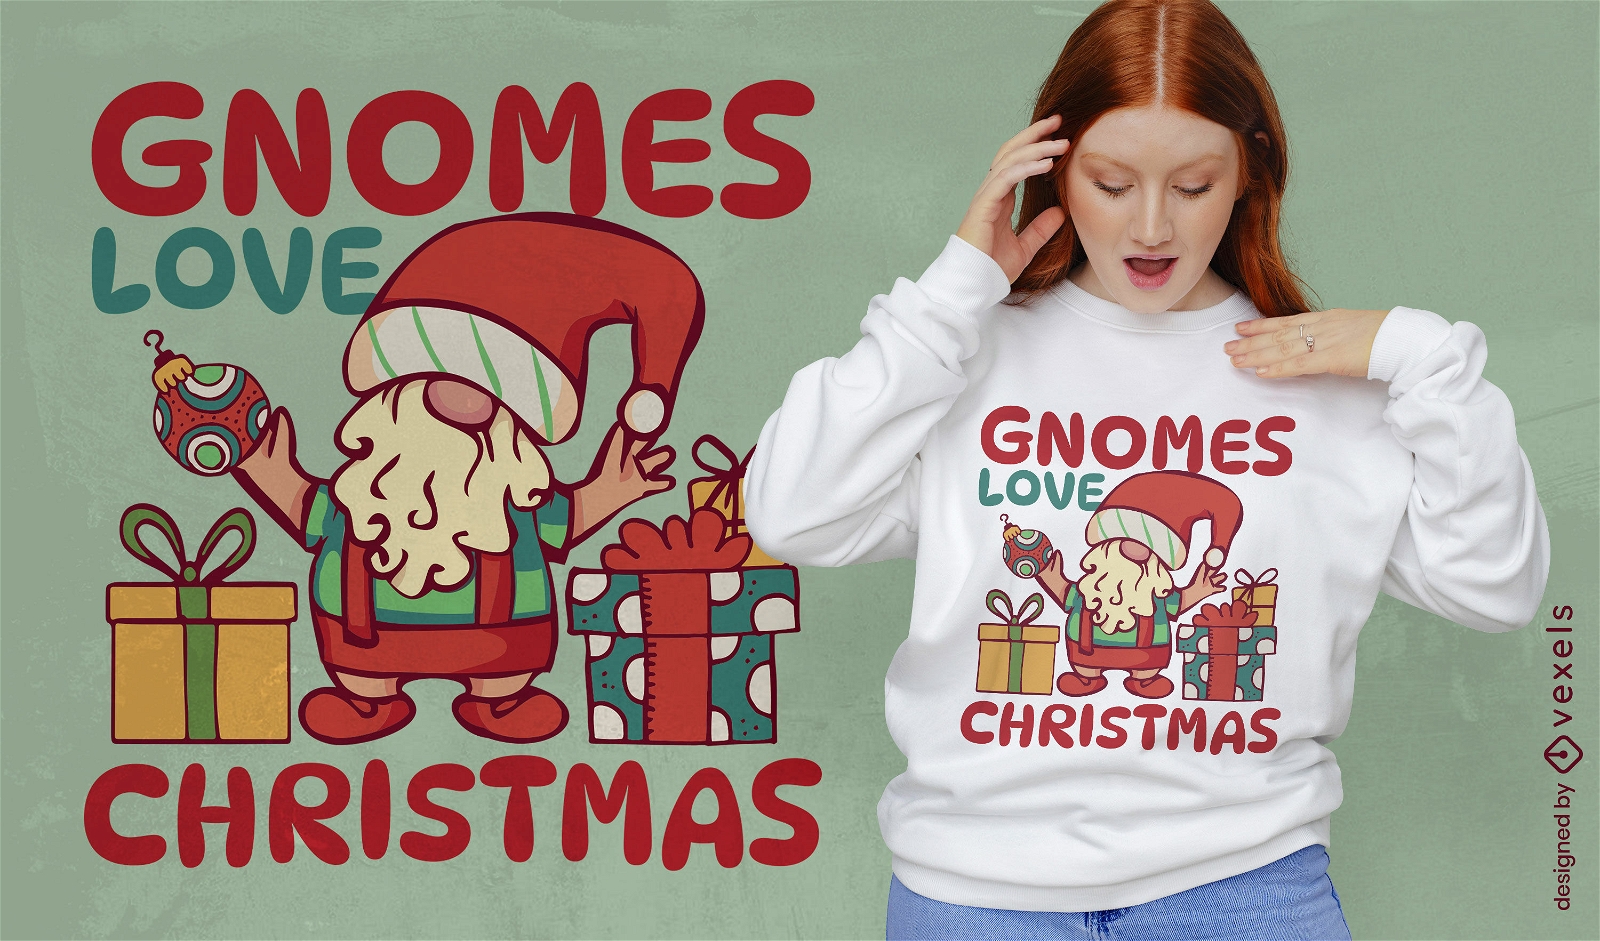 Gnomes love christmas t-shirt design